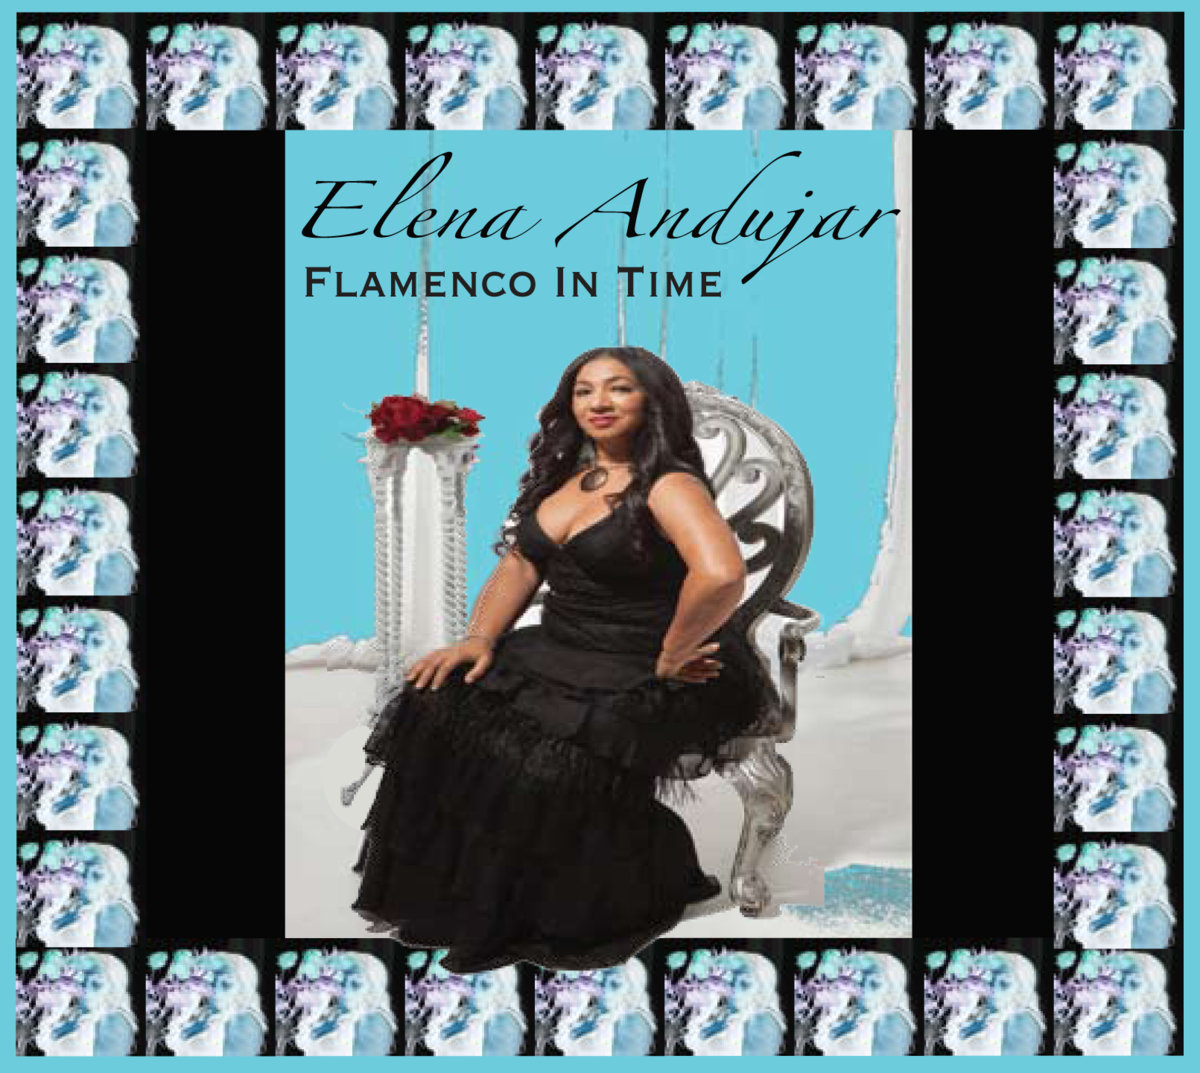 Elena Andujar Flamenco in Time Album Cover